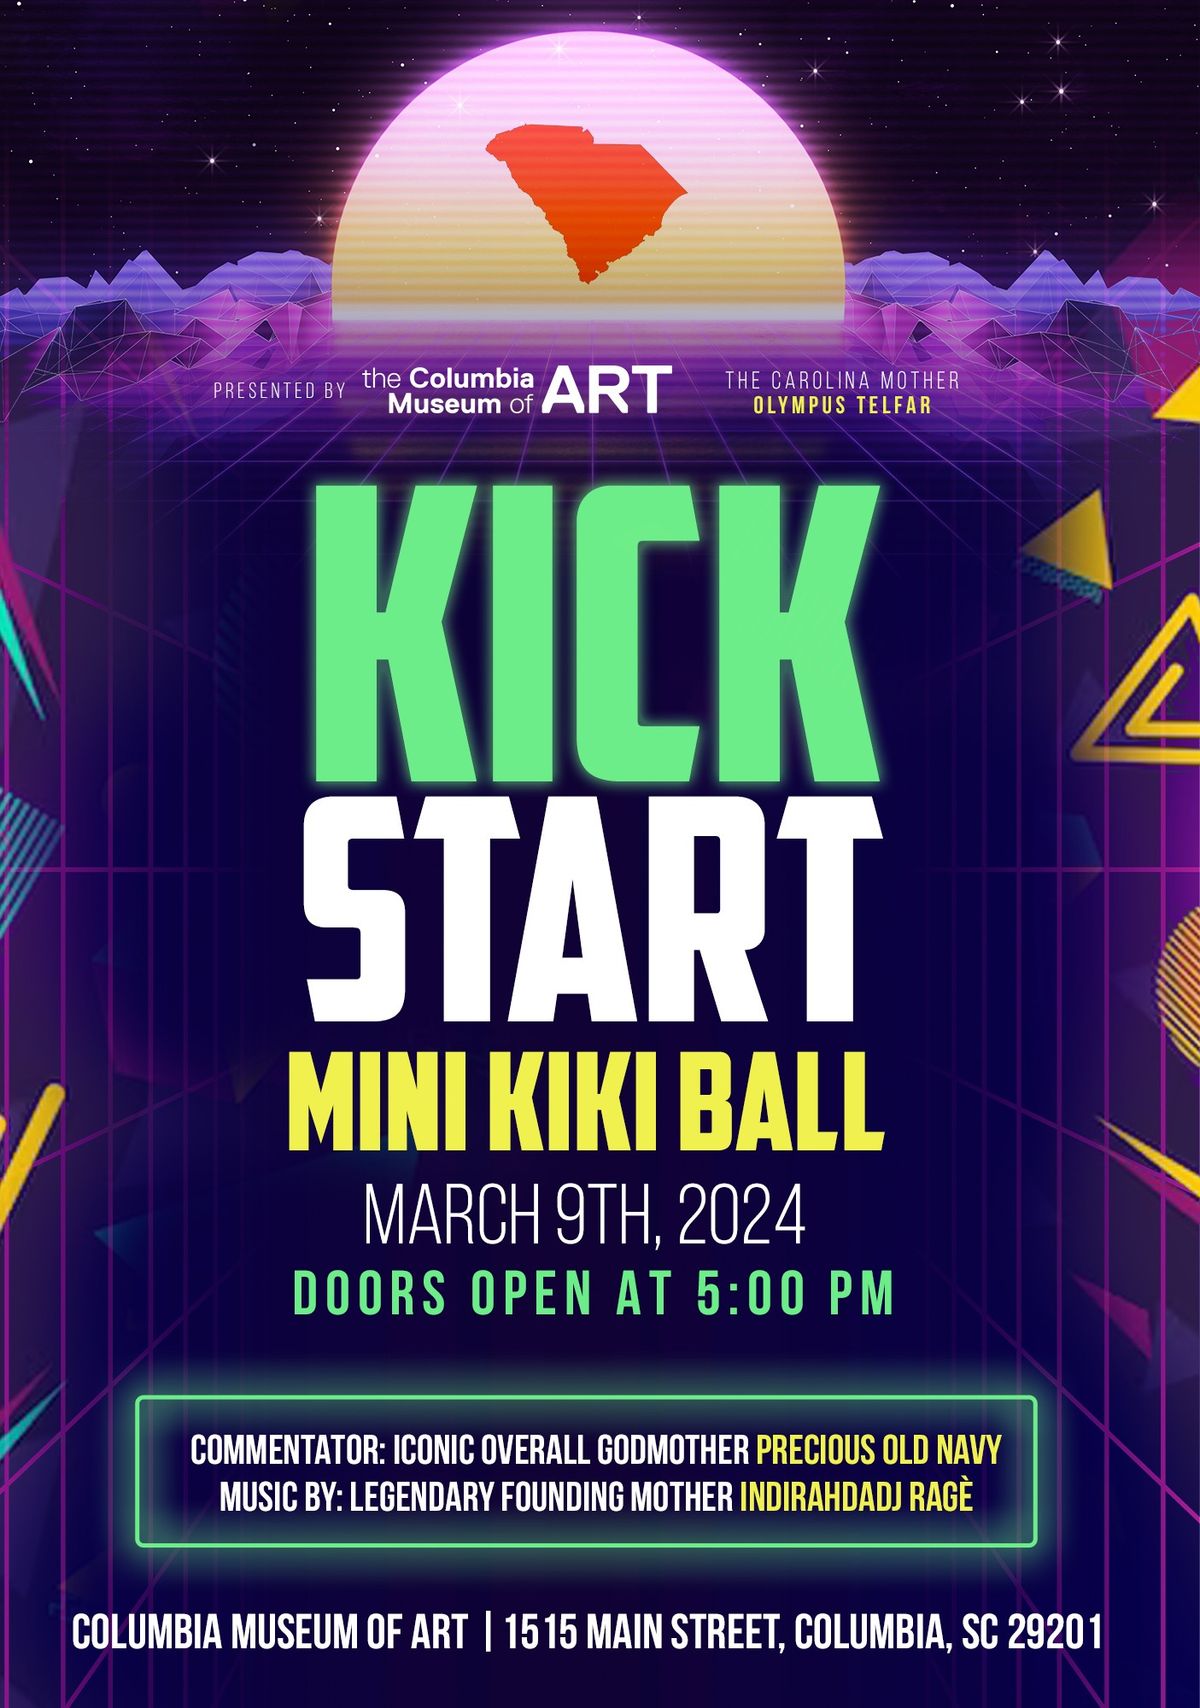 The Kickstart Mini Kiki Ball